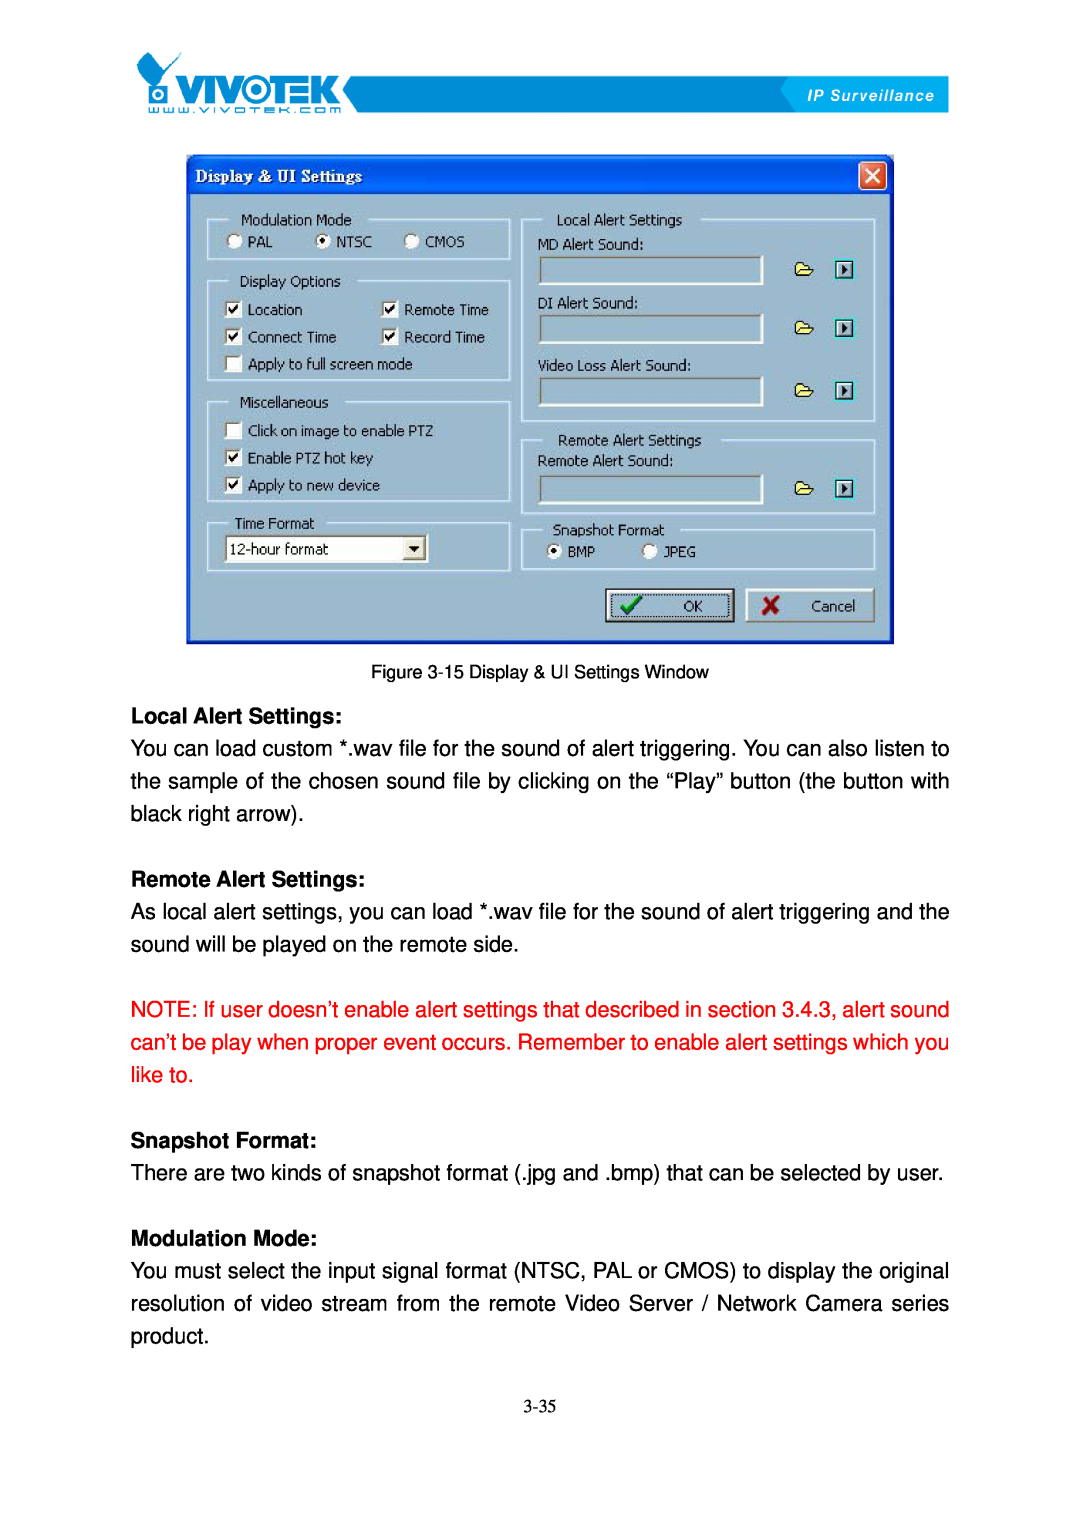 Vivotek ST3402 user manual Local Alert Settings, Remote Alert Settings, Snapshot Format, Modulation Mode 